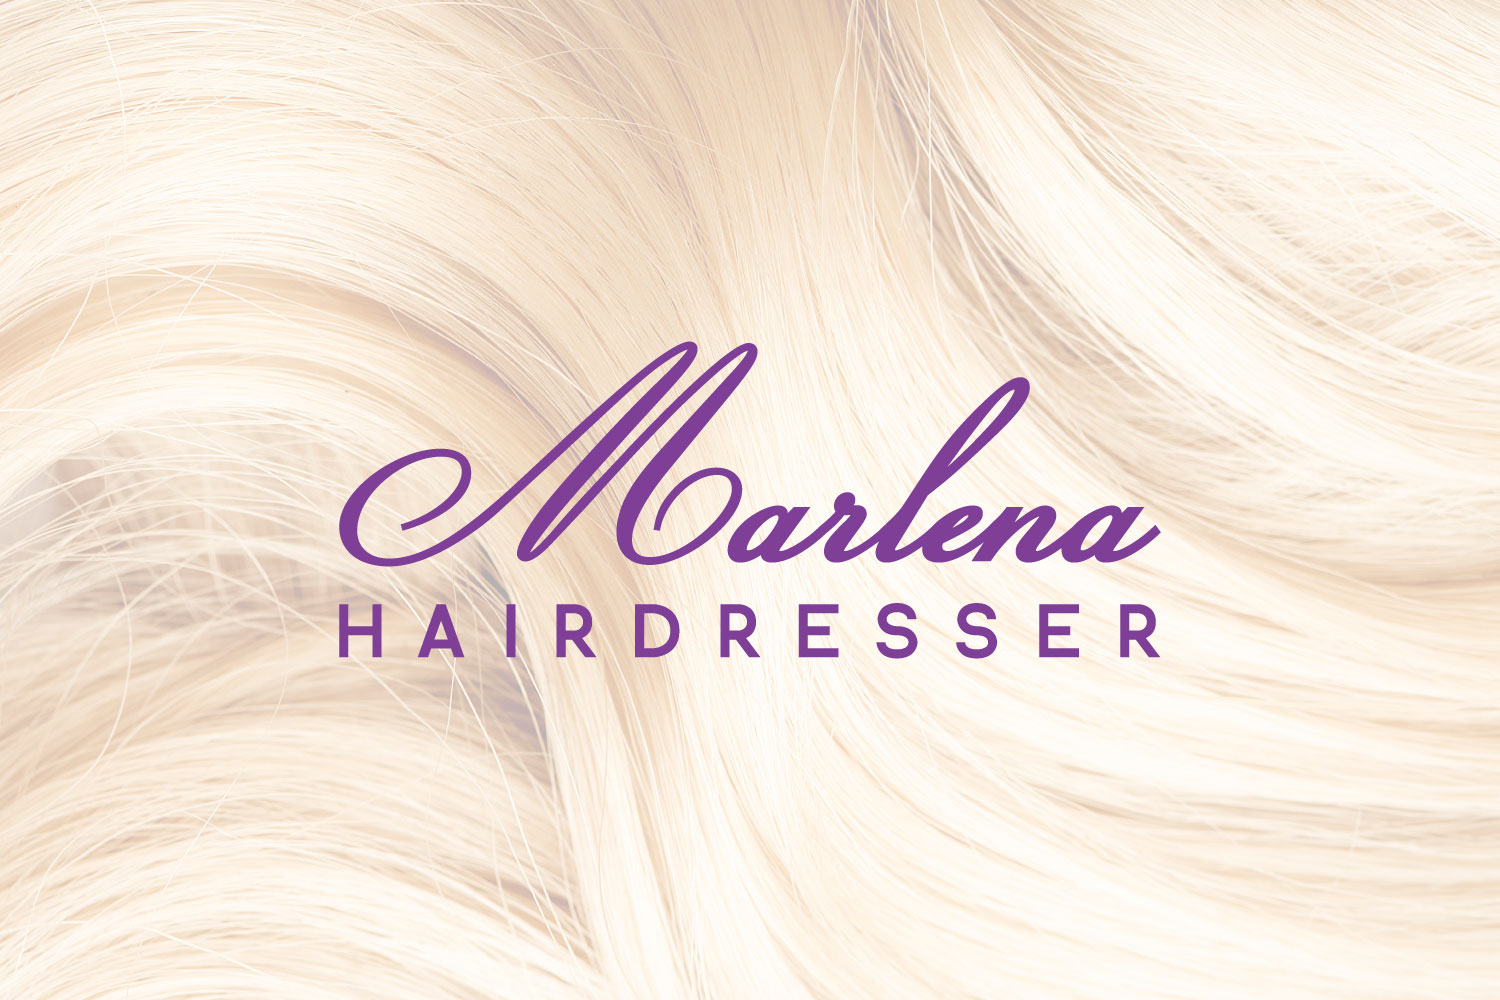 Projekt logotyp Marlena